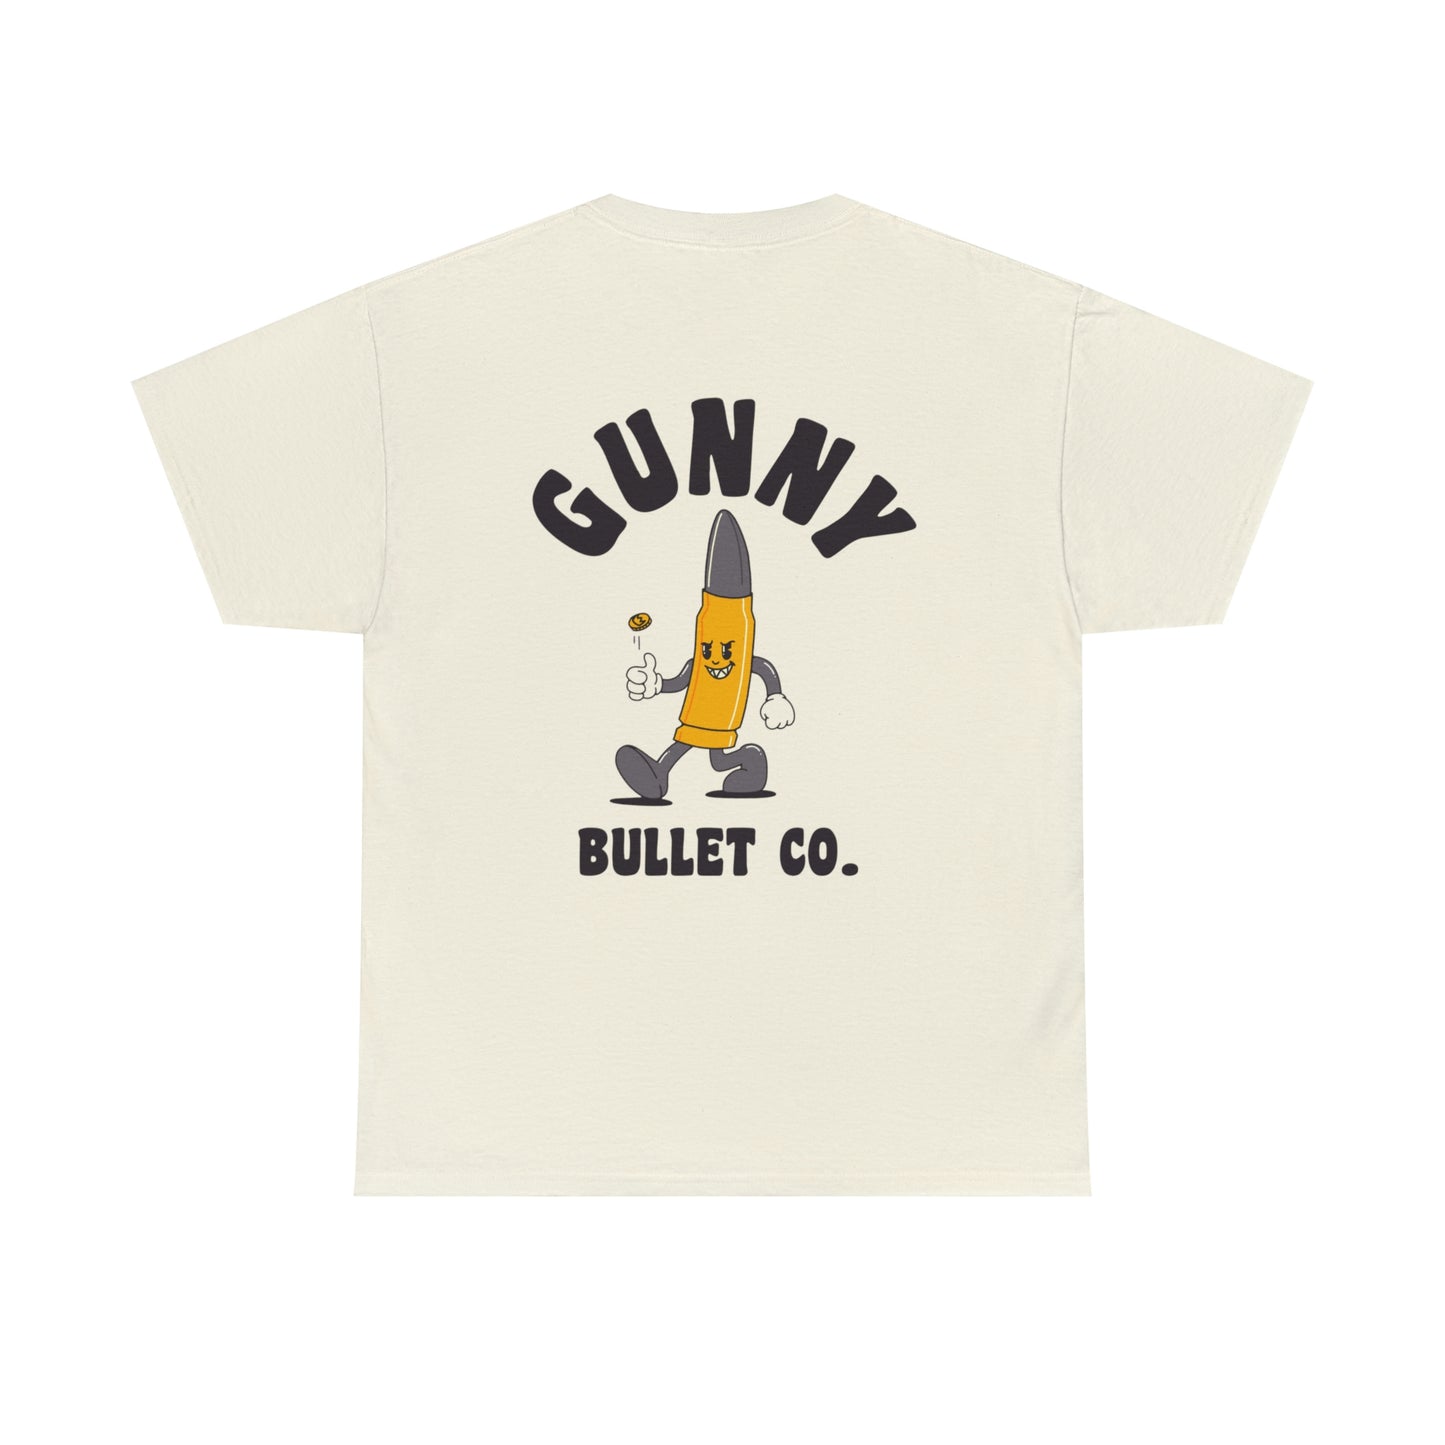 GUNNY Bullet Co. "Employee" Tee